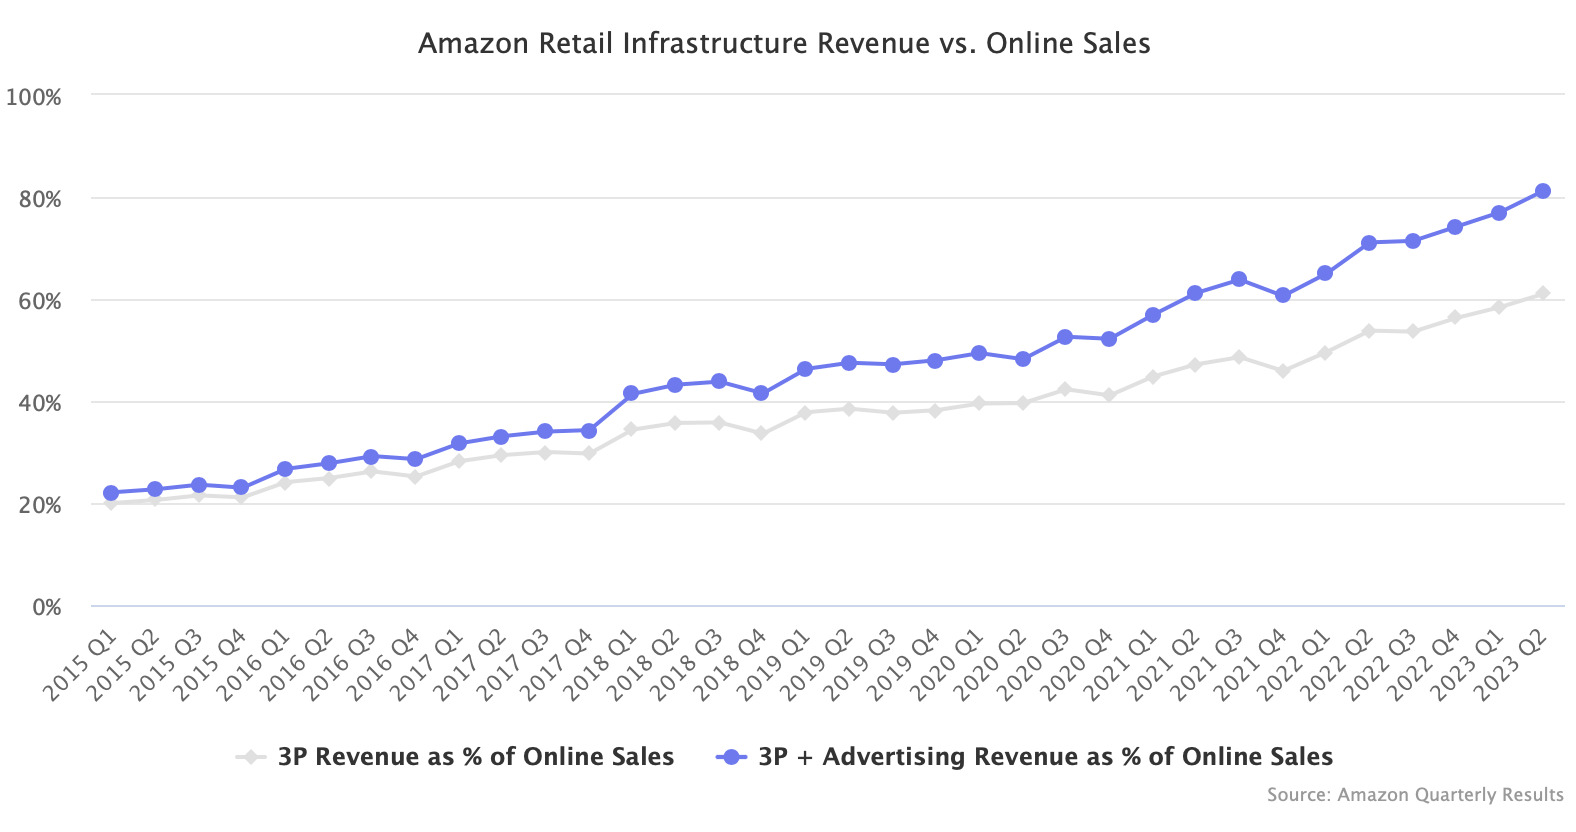 Amazon Retail Infrastructure Revenue vs. Online Sales